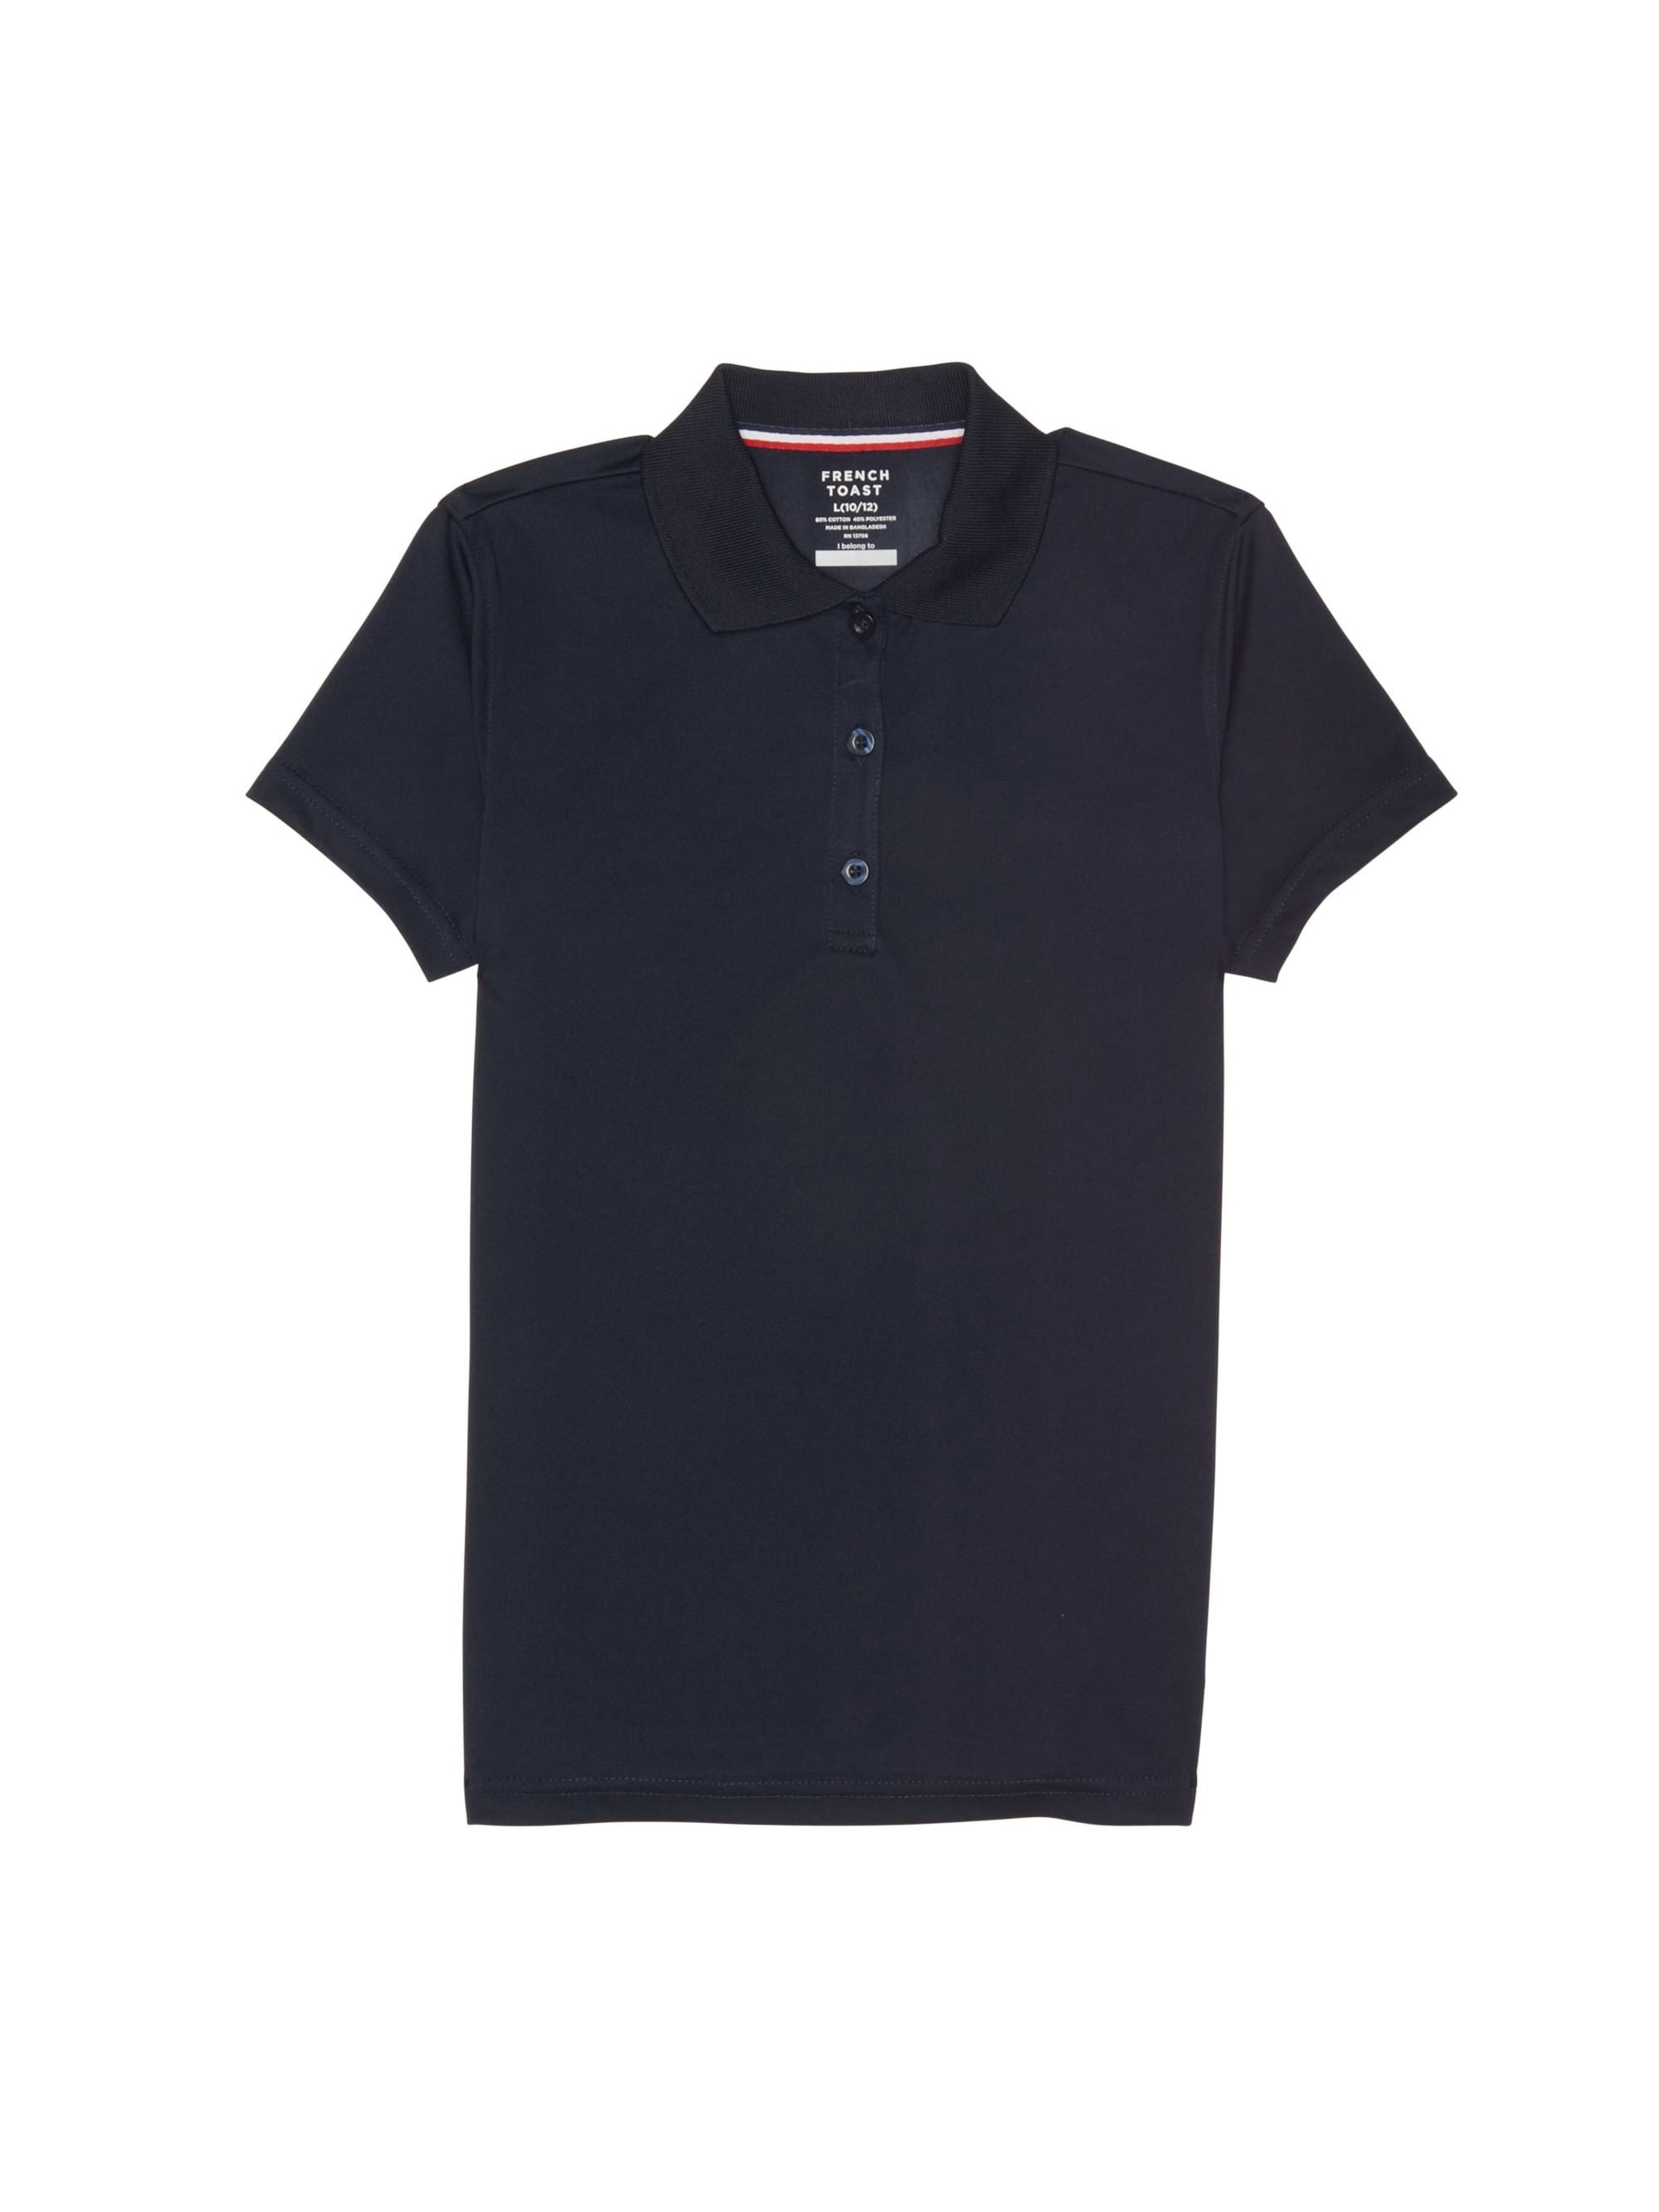 Boys Black Moisture Wicking Polo Shirt Premium Authentic School Uniform 